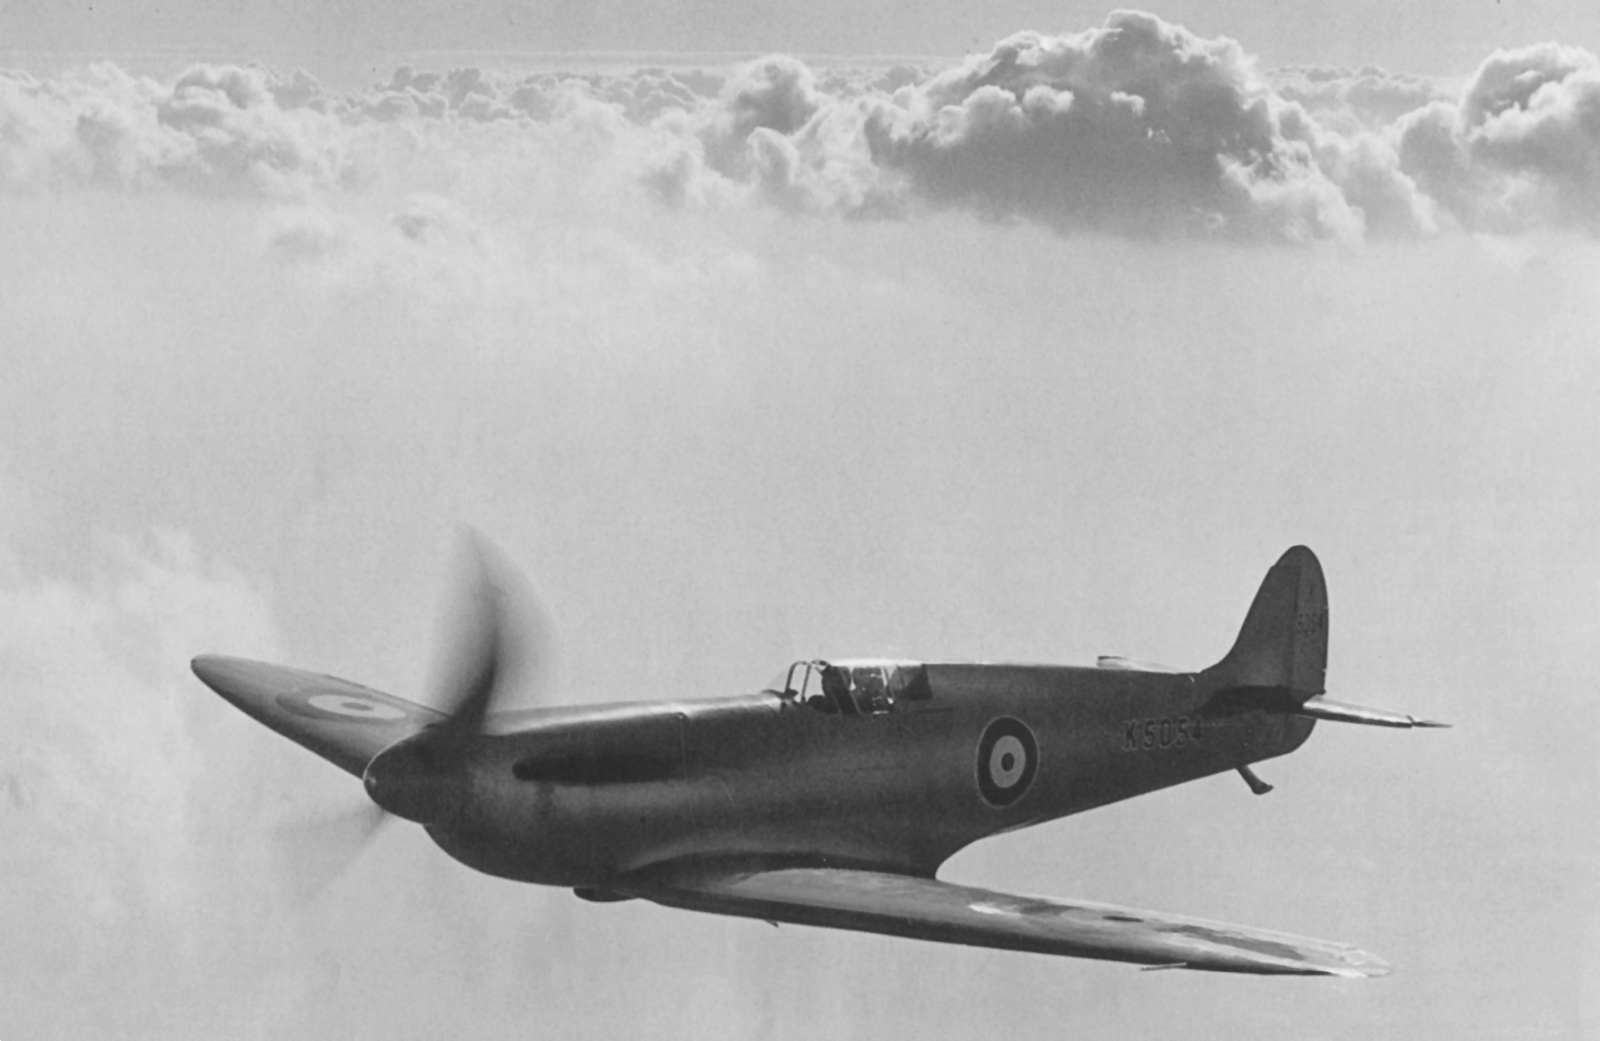 The Spitfire took her maiden flight in 1936